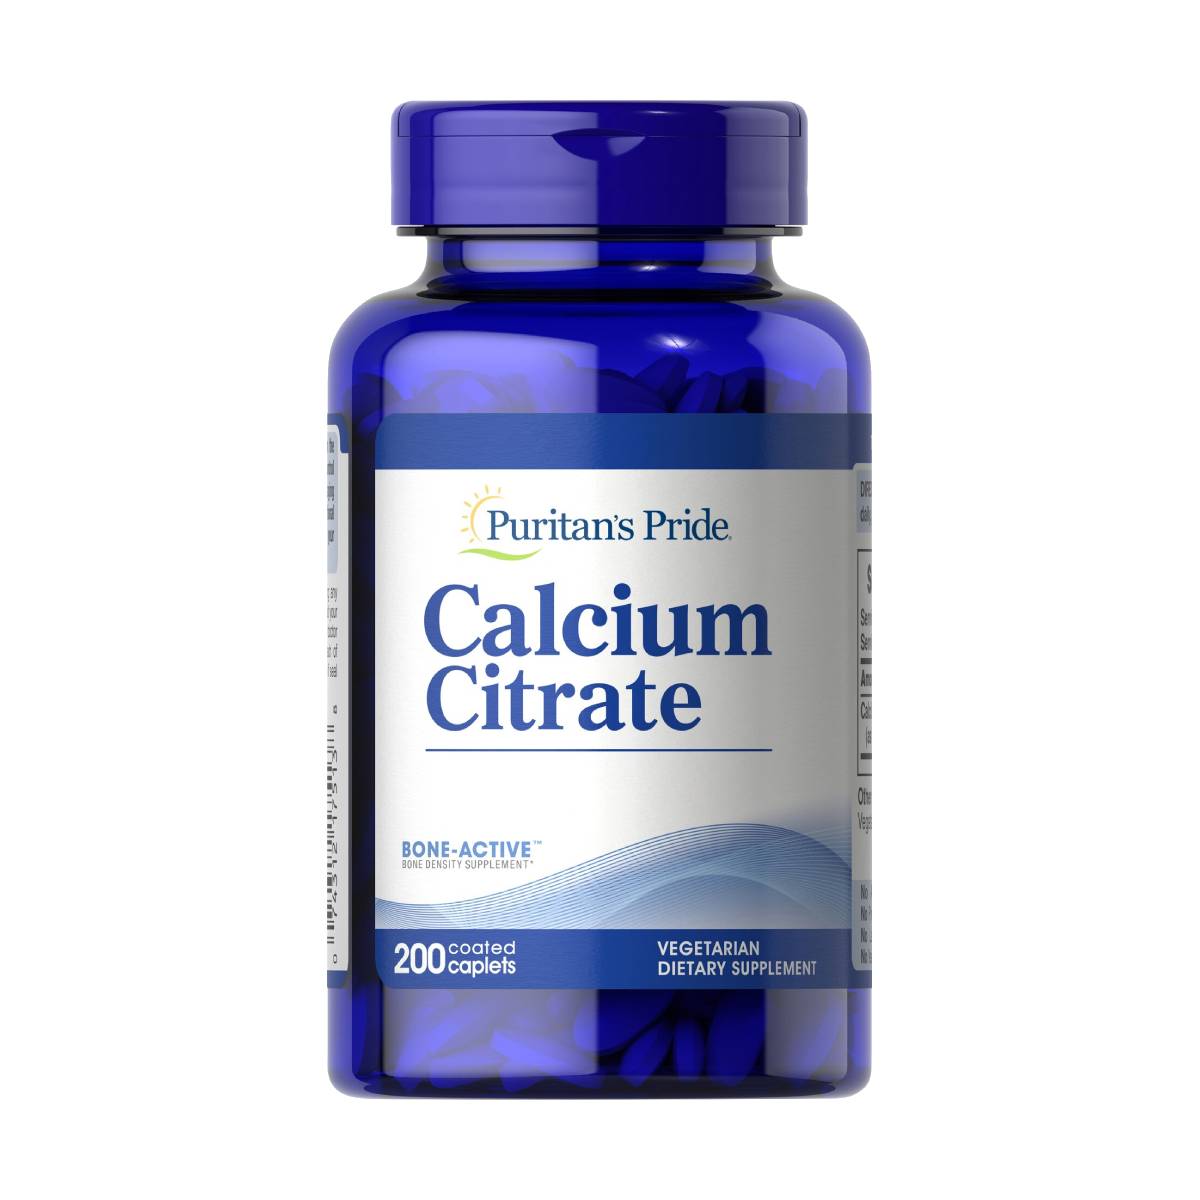 Puritan's Pride, Calcium Citrate 200 mg, Puritans Pride, Citrato de Calcio 200 mg